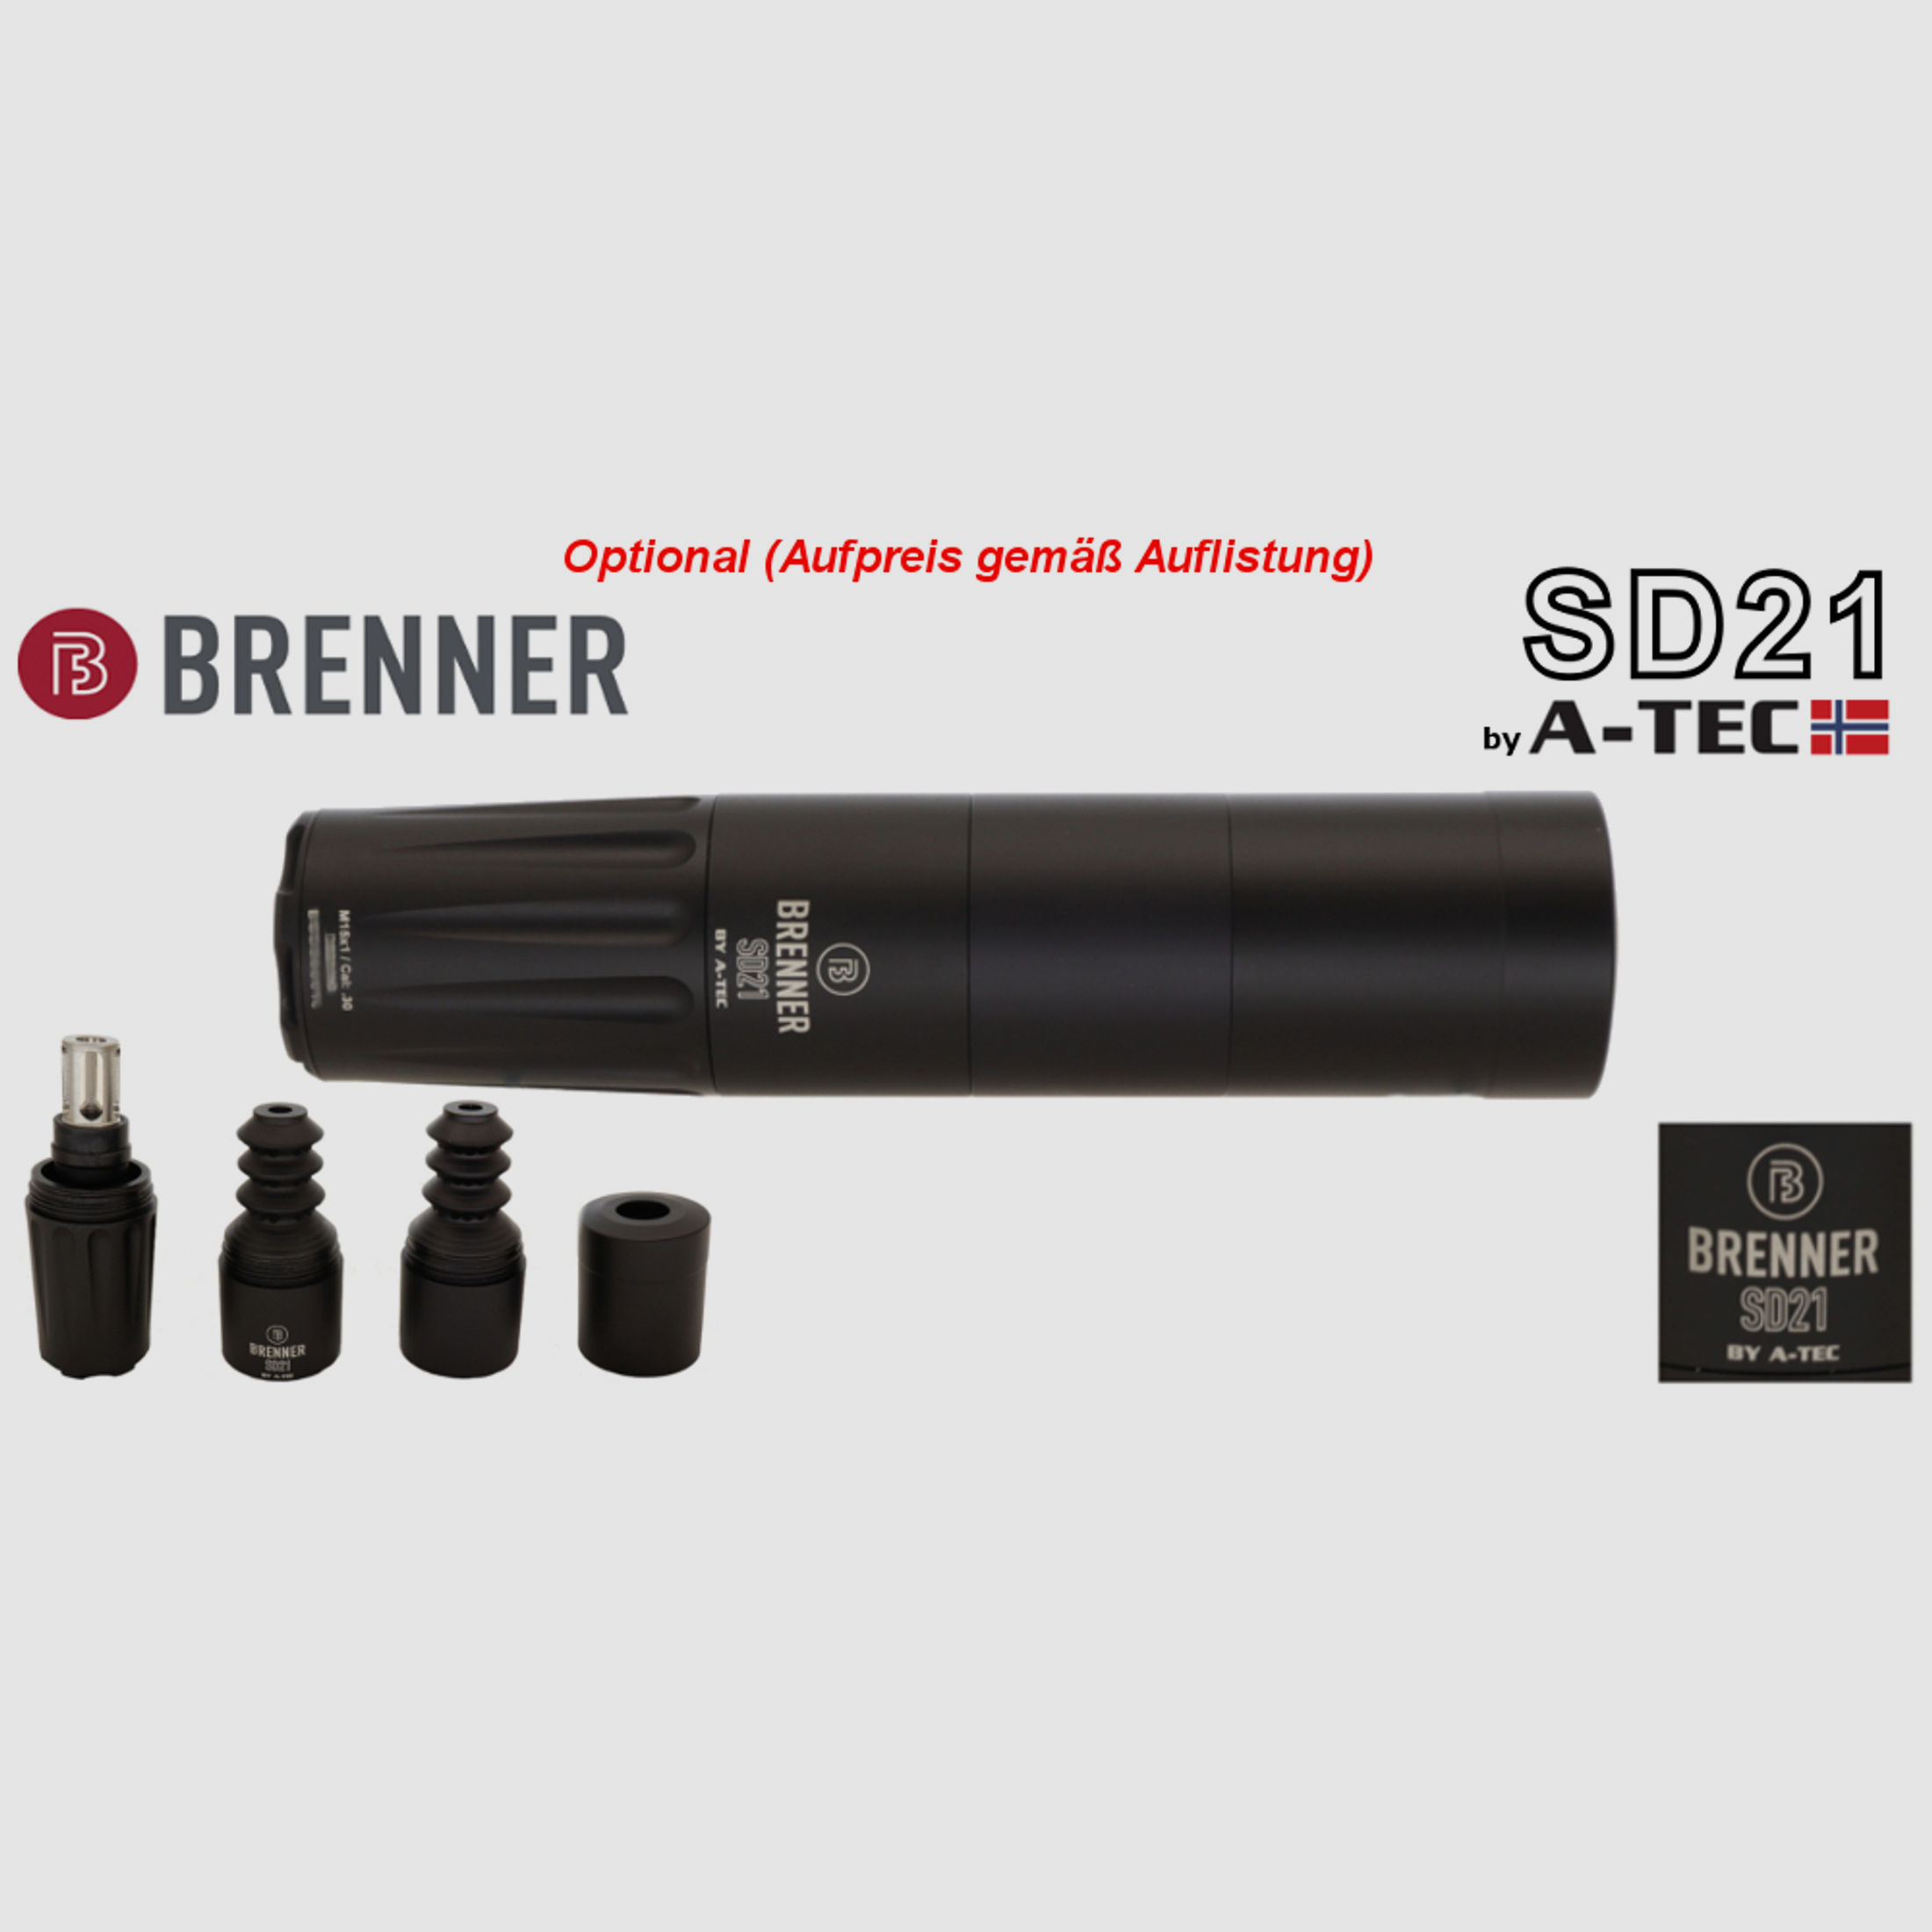 Brenner Komplettpaket: BR20 B&H Prohunter Lochschaft Zeiss V6 2.5-15 fertig montiert (Art.Nr.: BR20PHP1) Finanzierung möglich